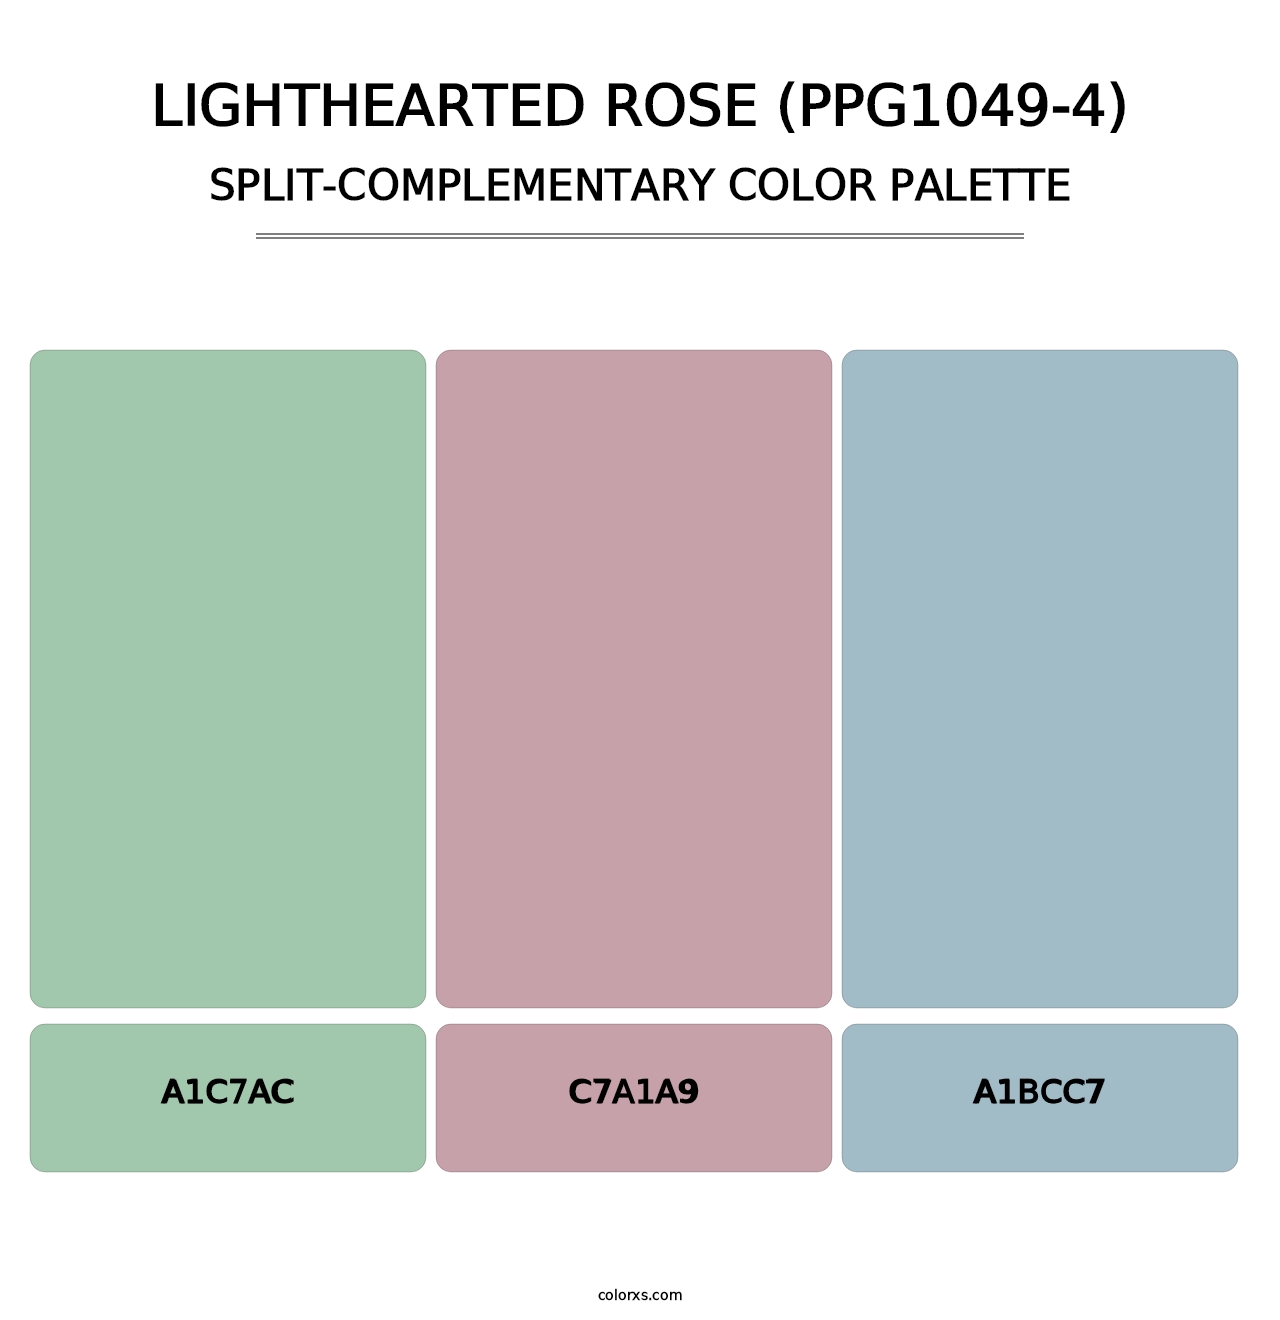 Lighthearted Rose (PPG1049-4) - Split-Complementary Color Palette